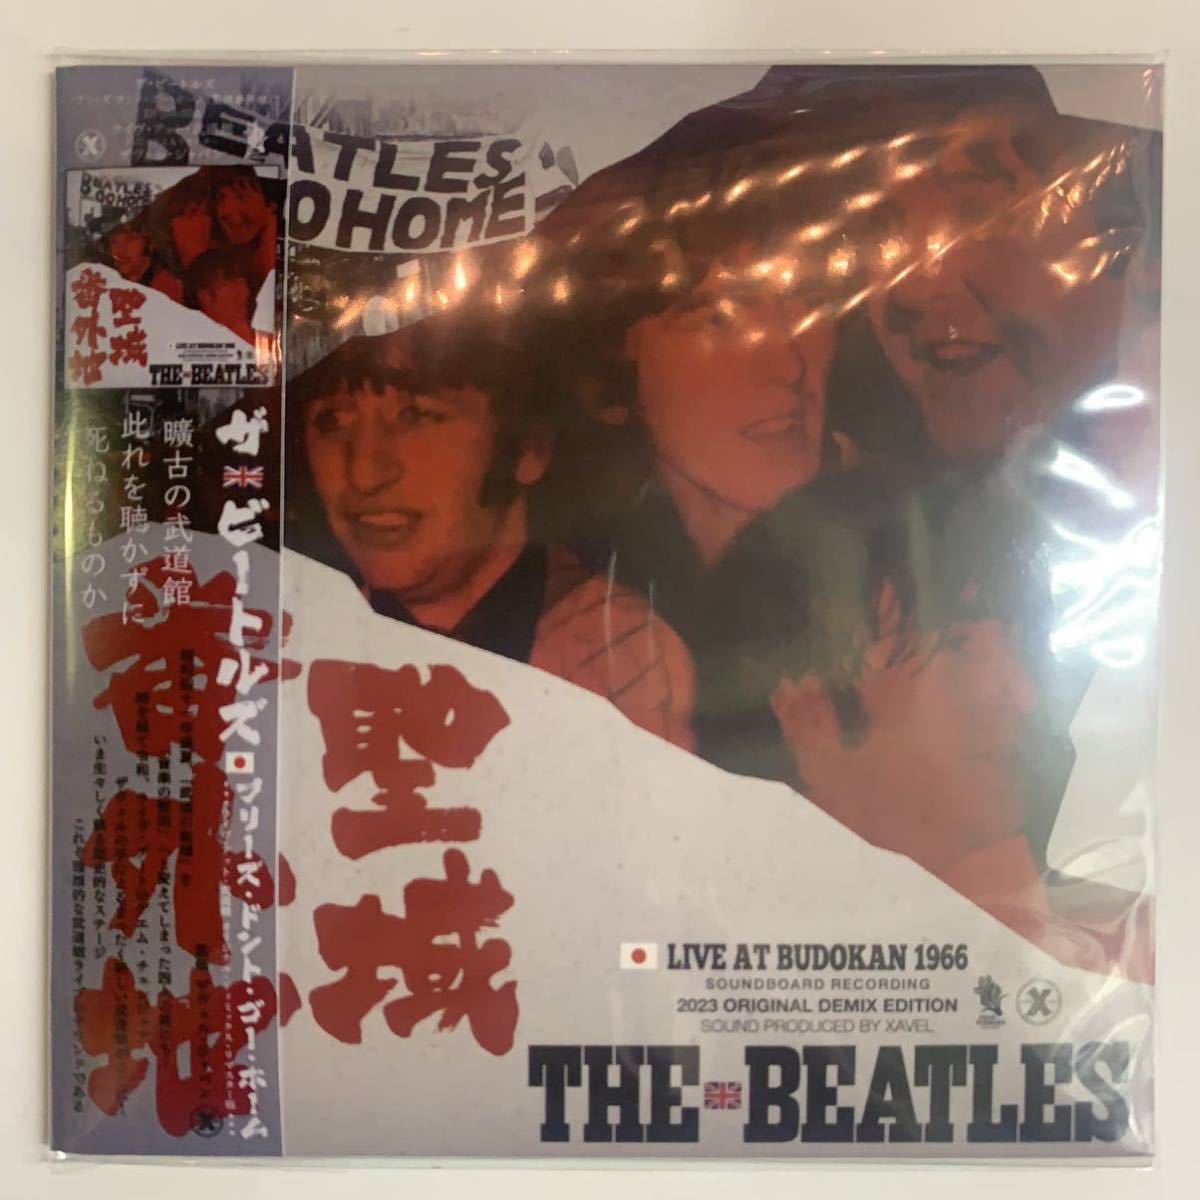 THE BEATLES / PLEASE DON'T GO HOME「聖域番外地」Budokan 1966 - Original Demix Edition 完全オリジナル・デミックス音源だ！_画像1